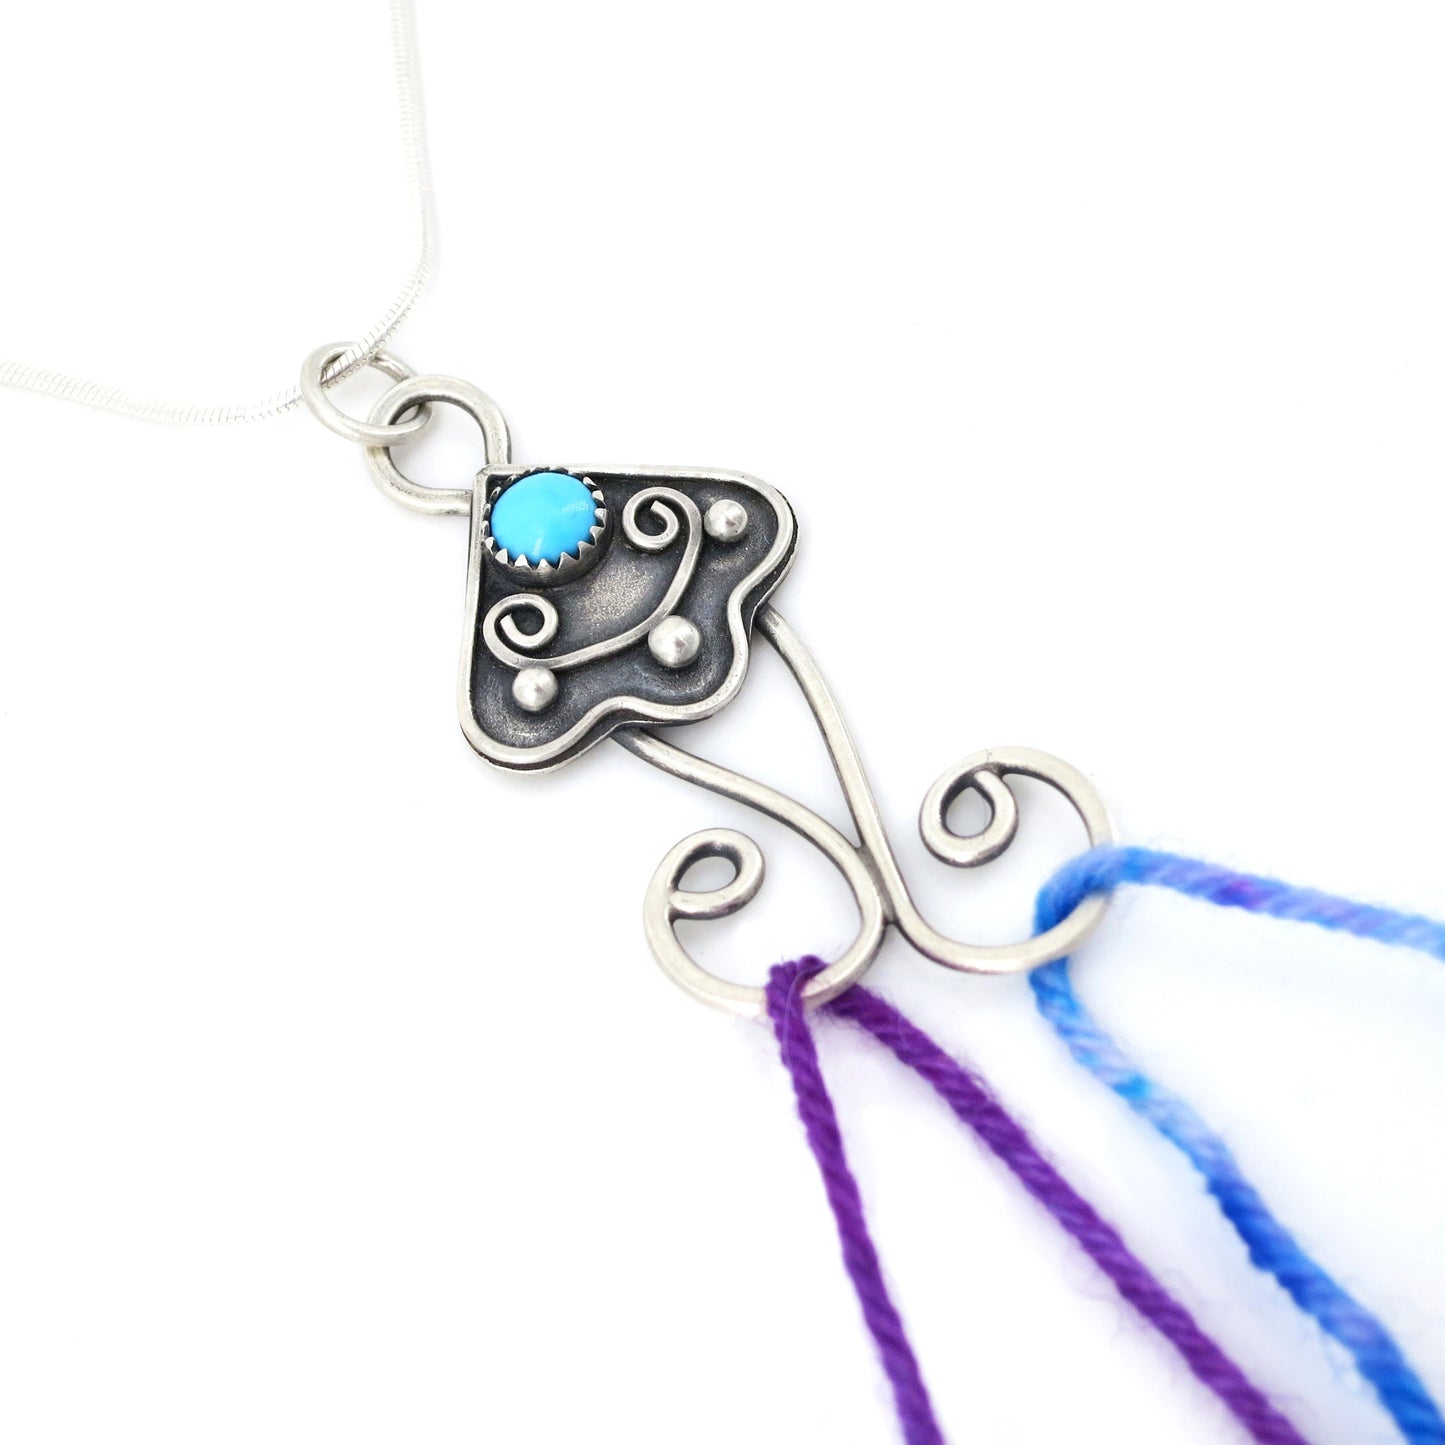 Portuguese Knitting Necklace - Jellyfish